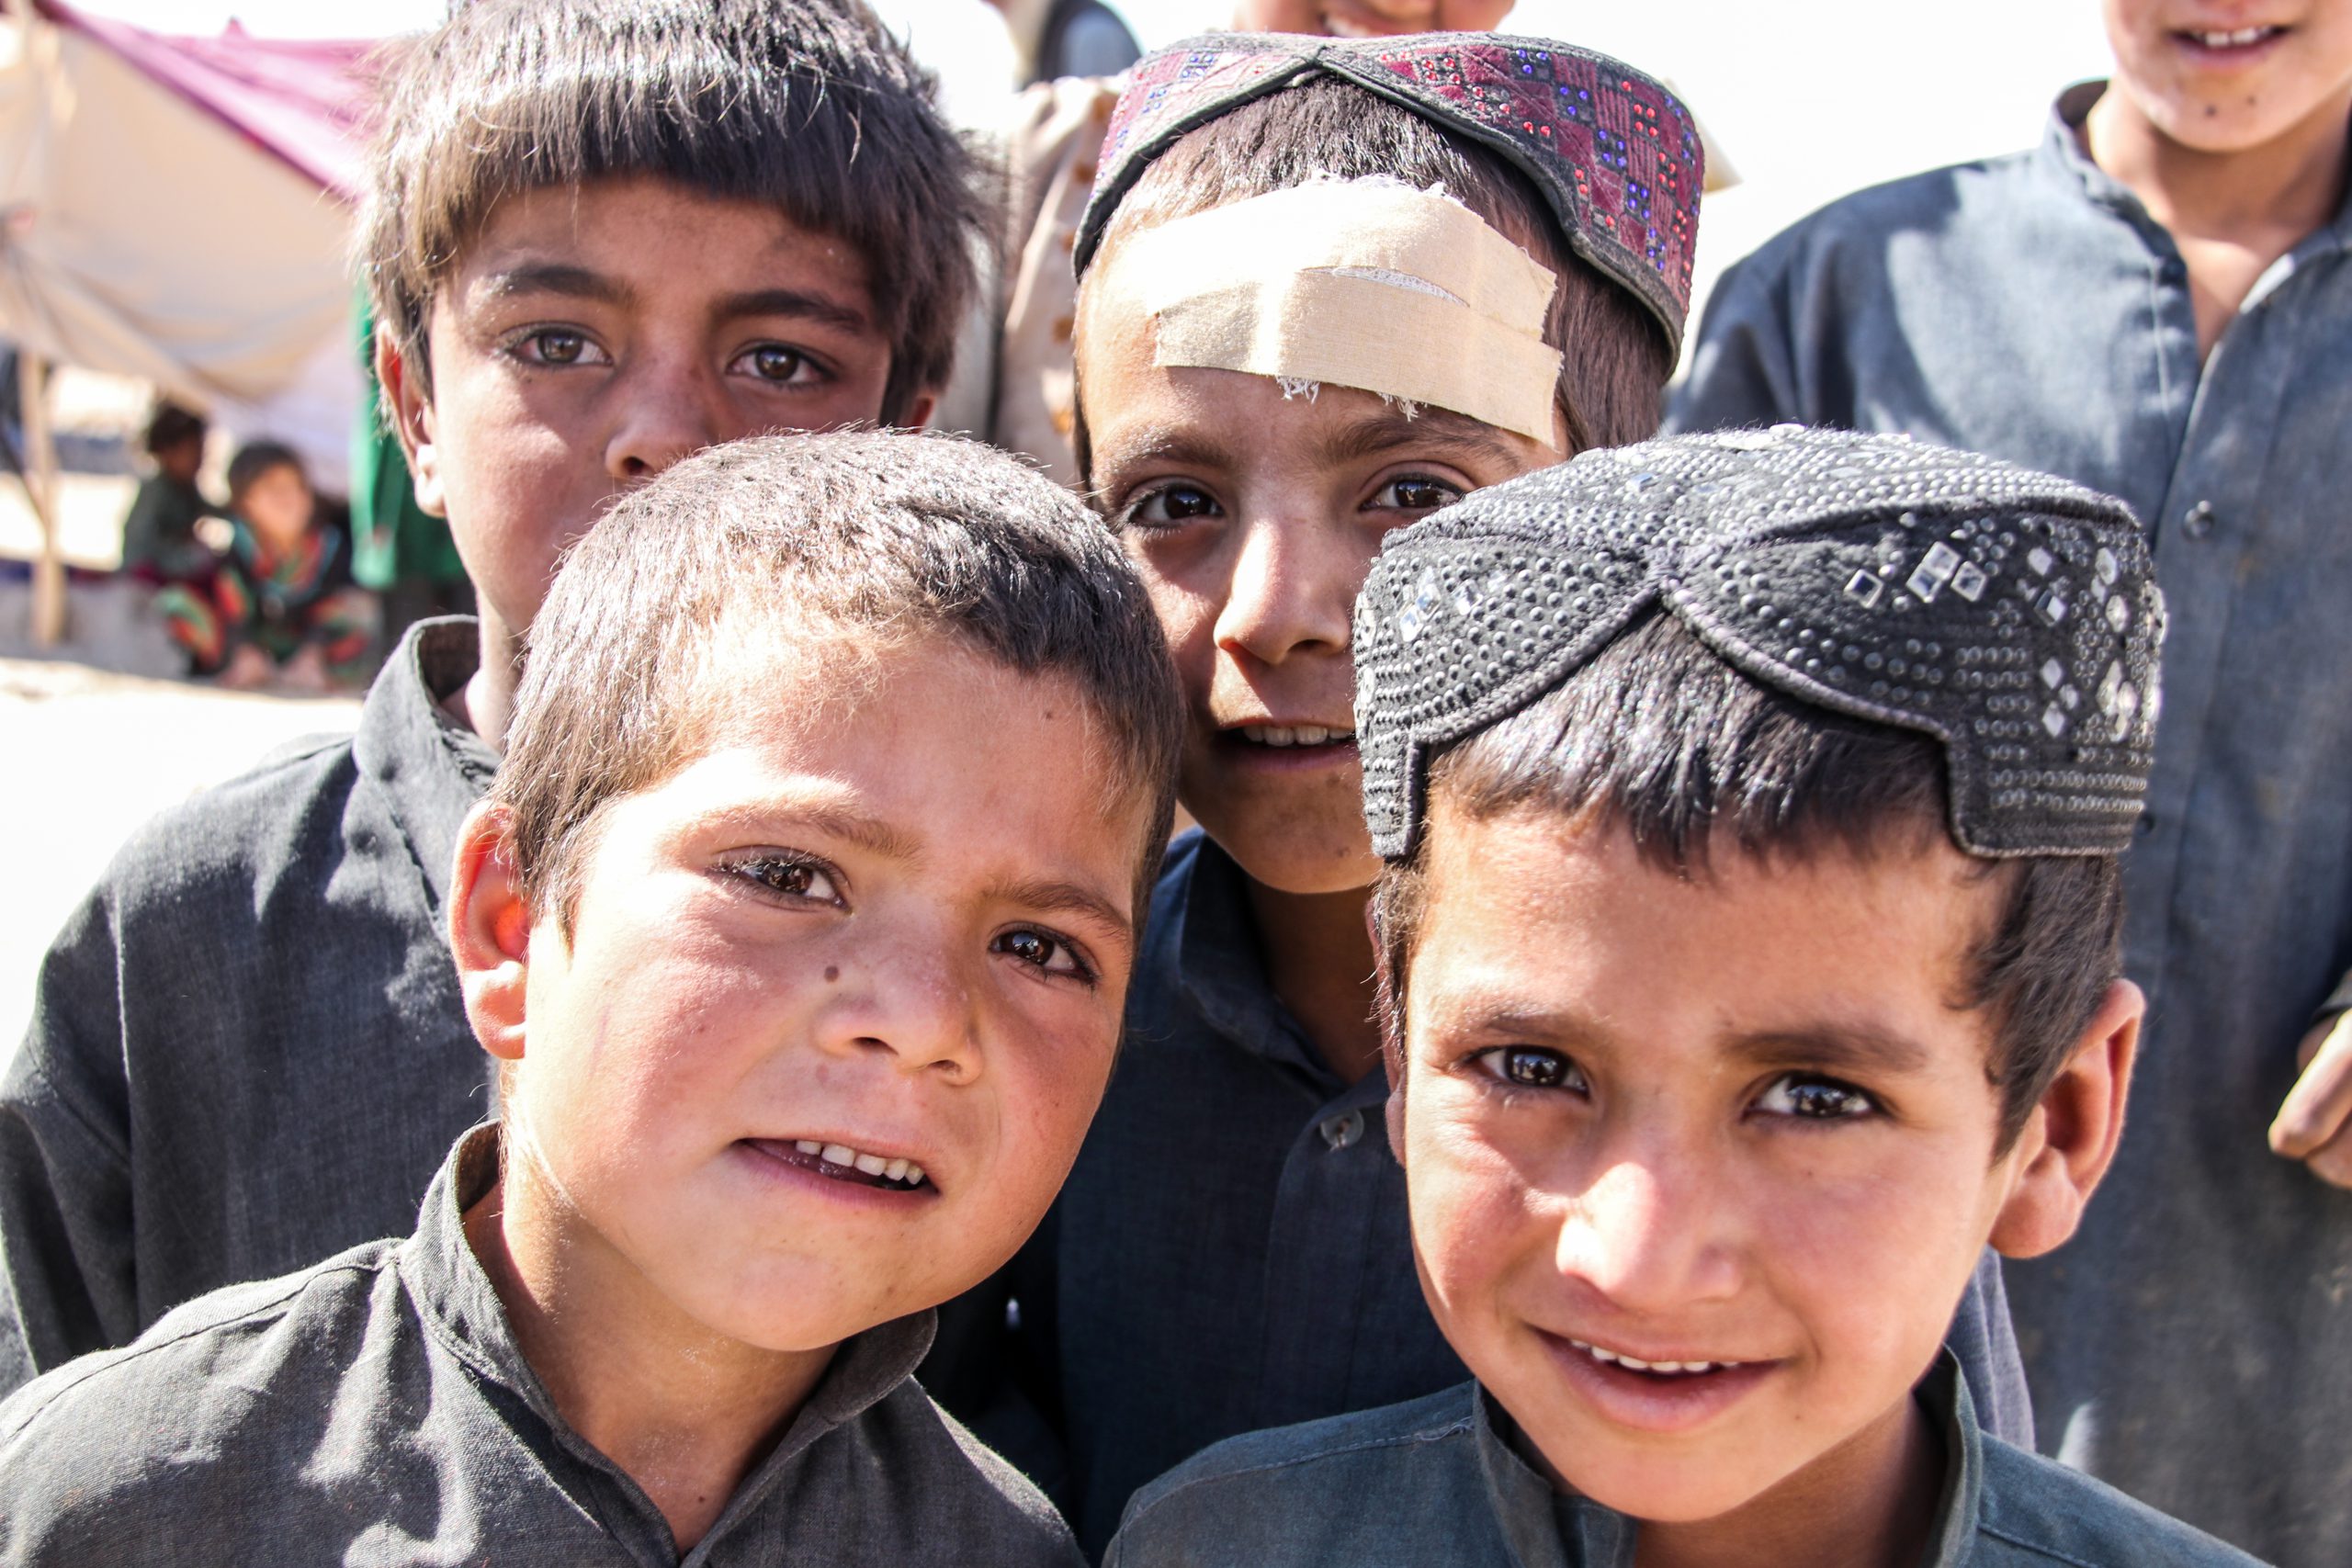 Bacha Bazi - severe child abuse disguised as an Afghani custom